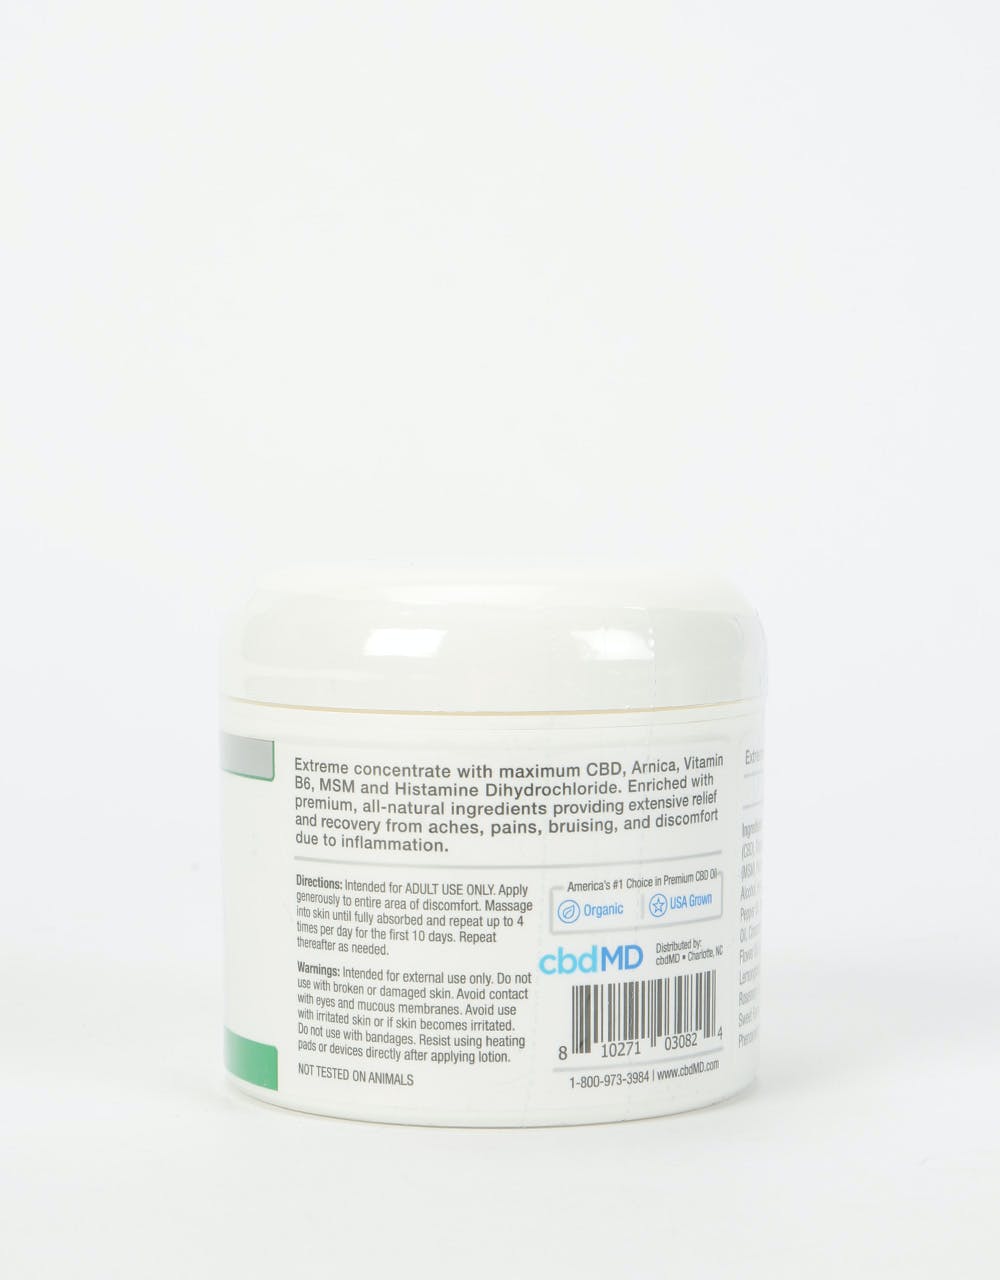 cbdMD Recover Inflammation Formula Cream (120ml/750mg)